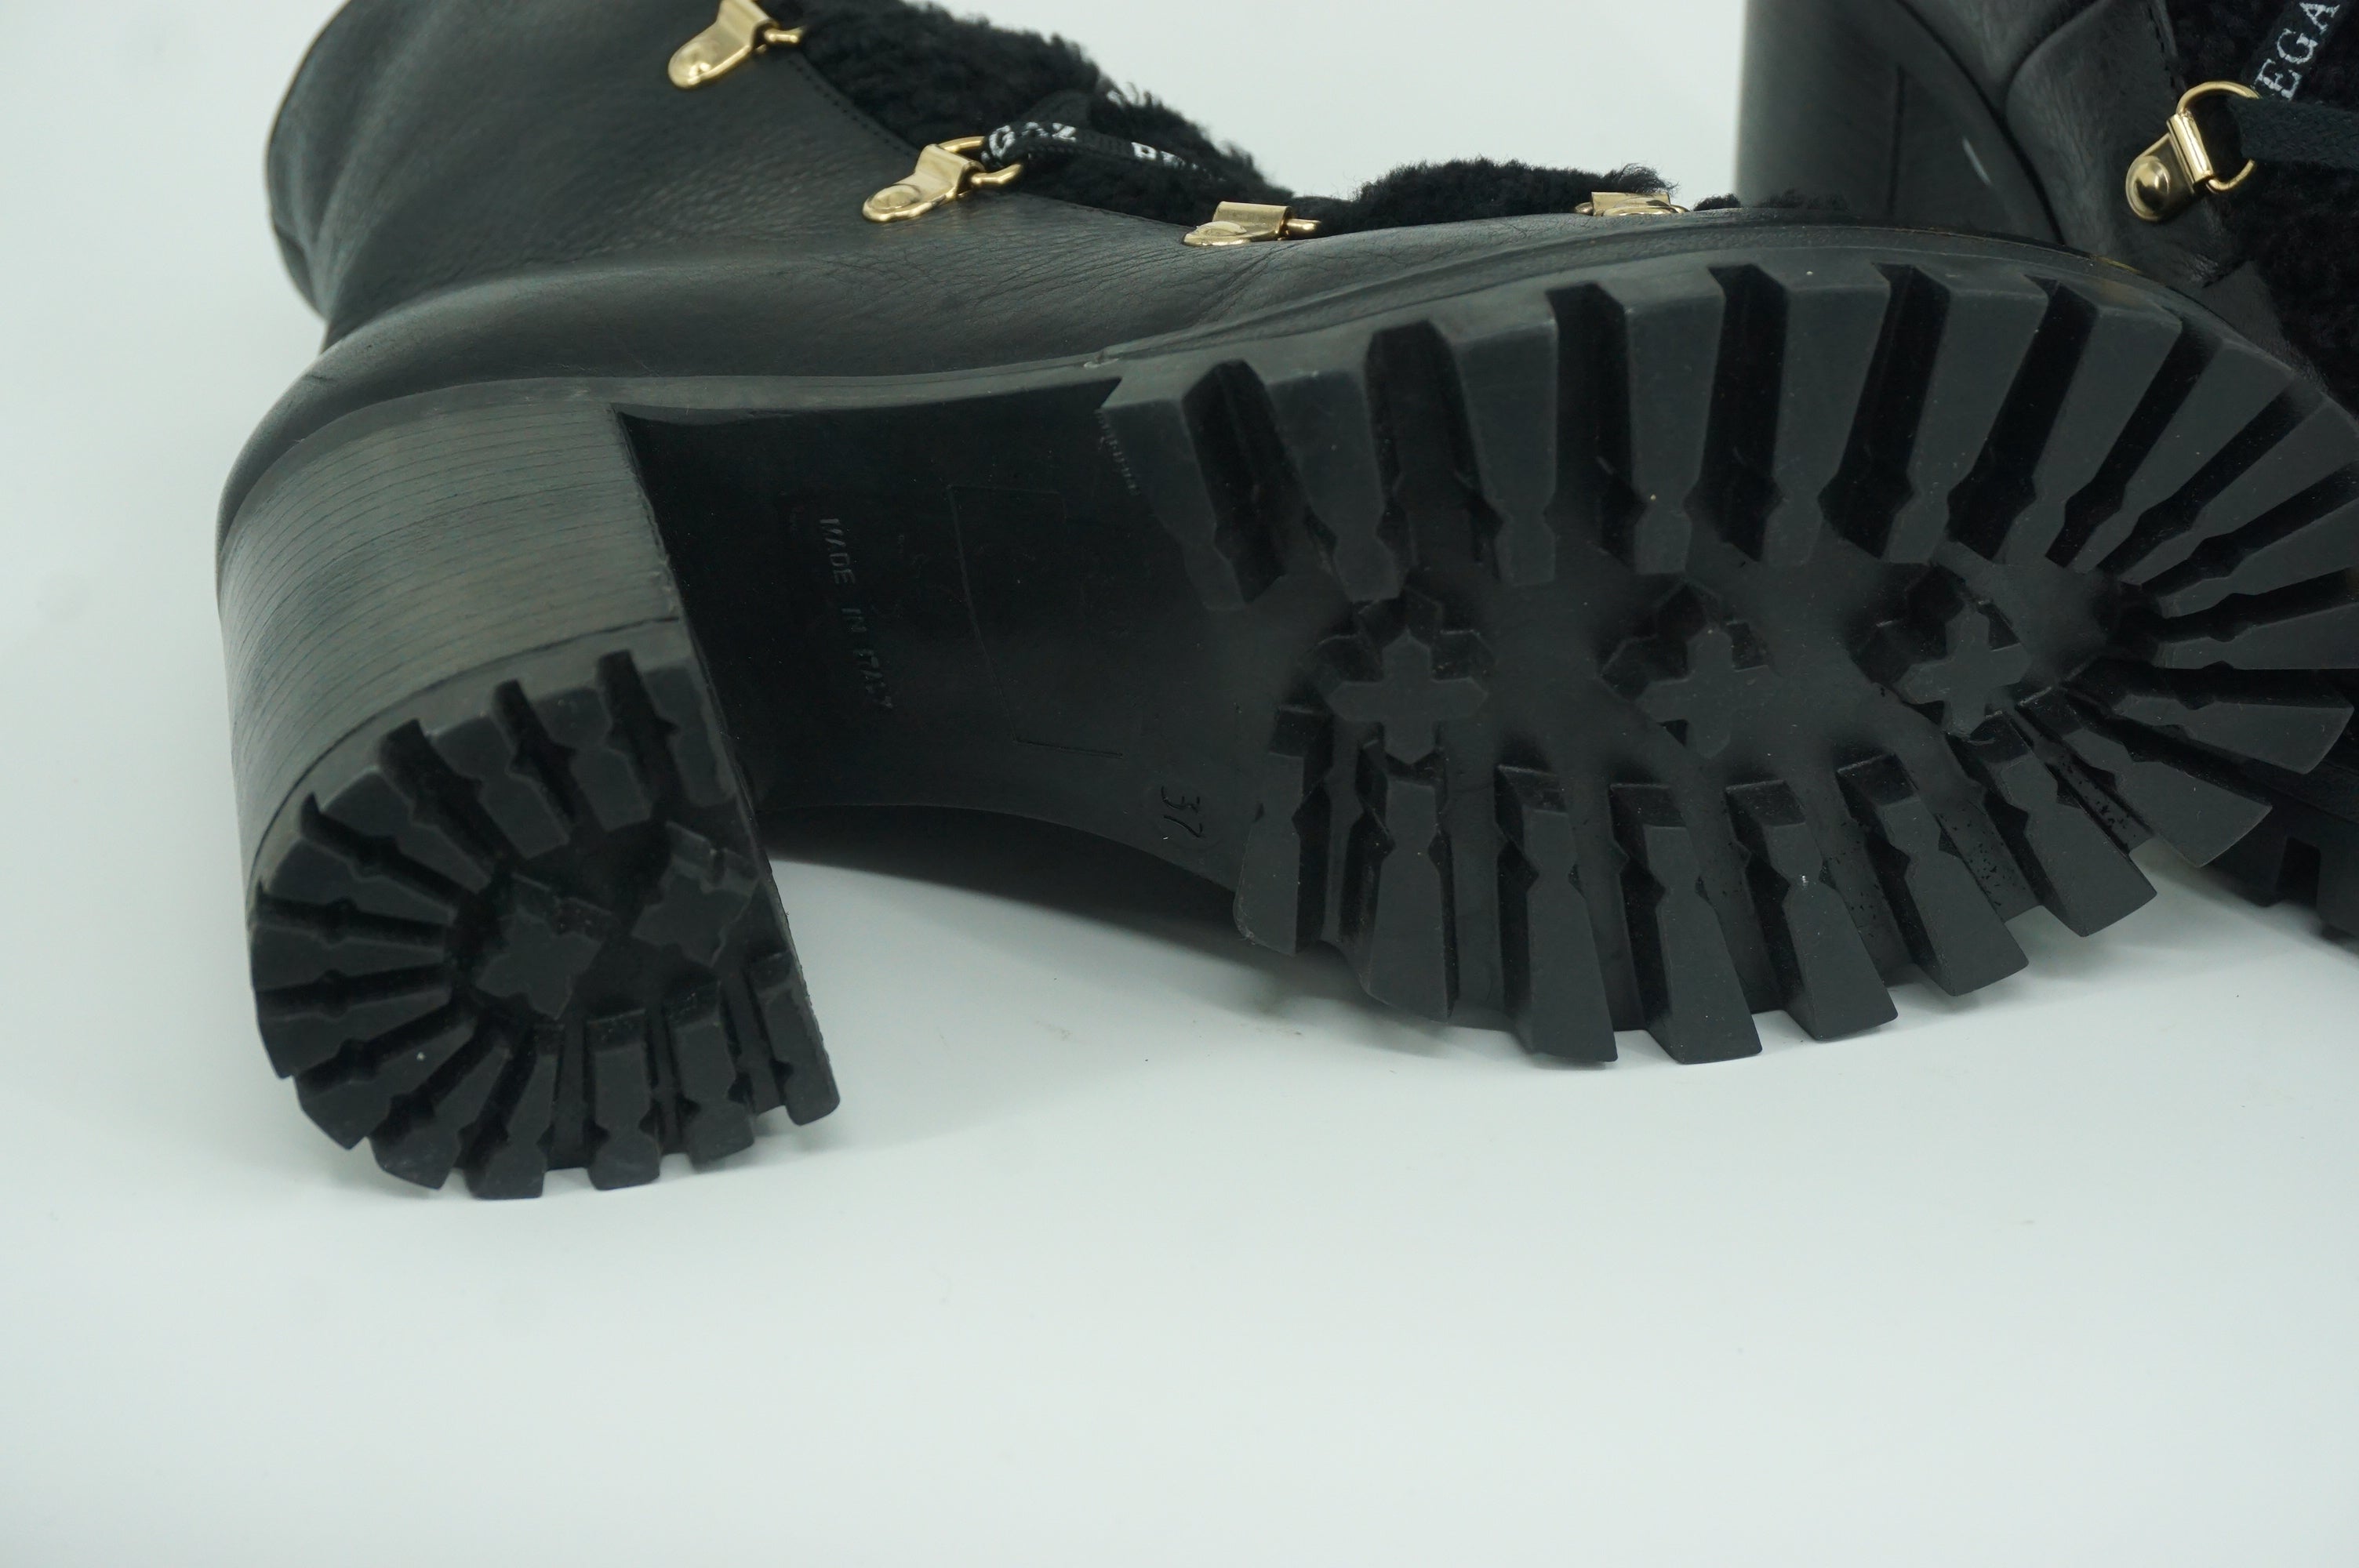 Pertegaz Pertegraz Shearling Lace-Black Suede Shearling Ankle Boot Size 37